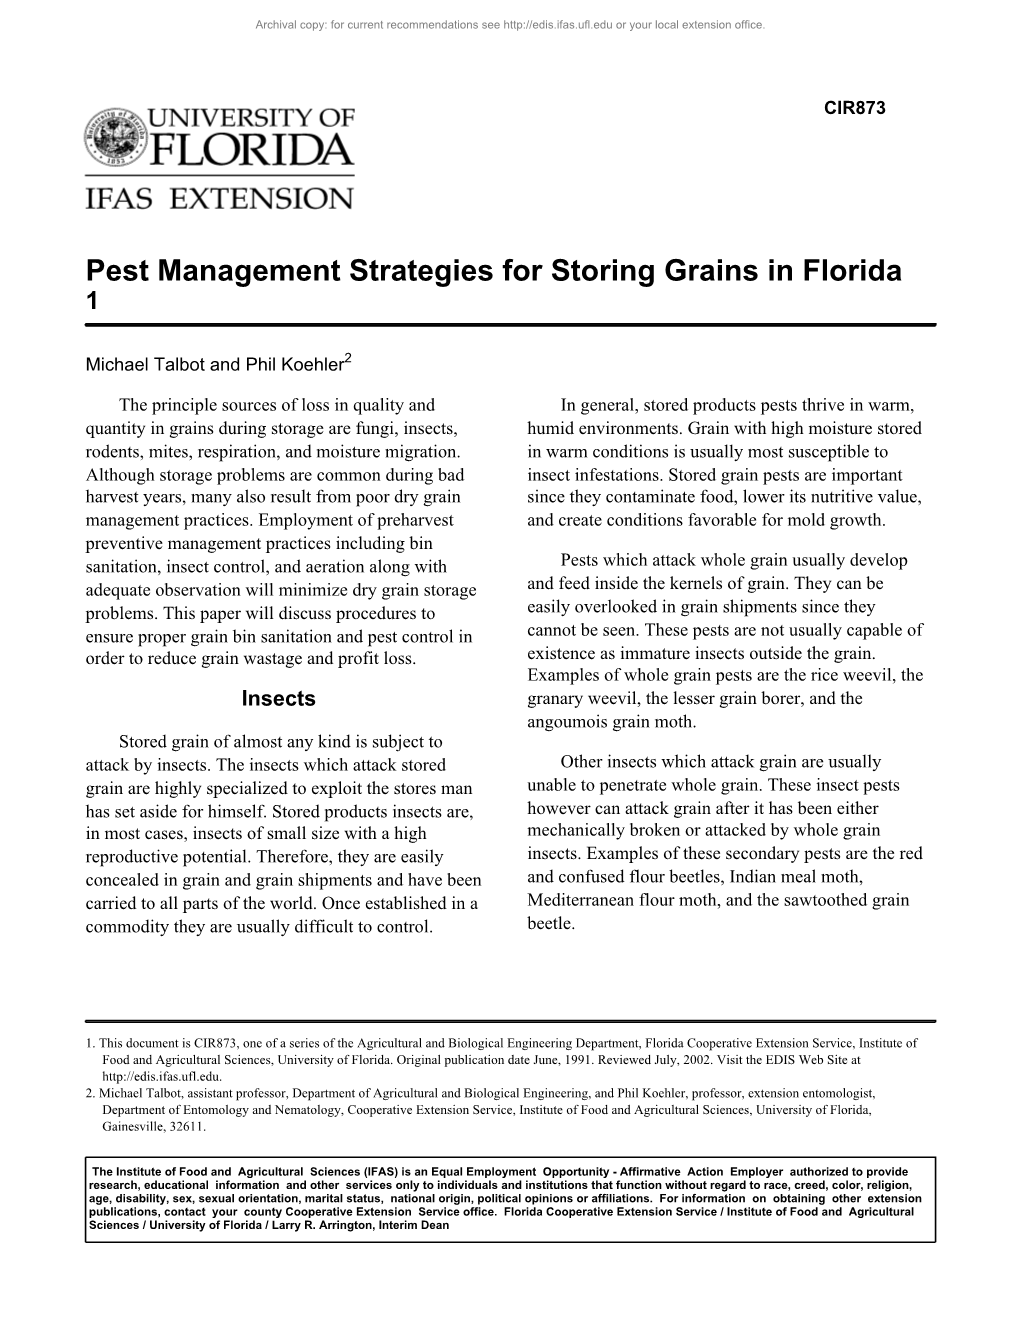 Pest Management Strategies for Storing Grains in Florida 1